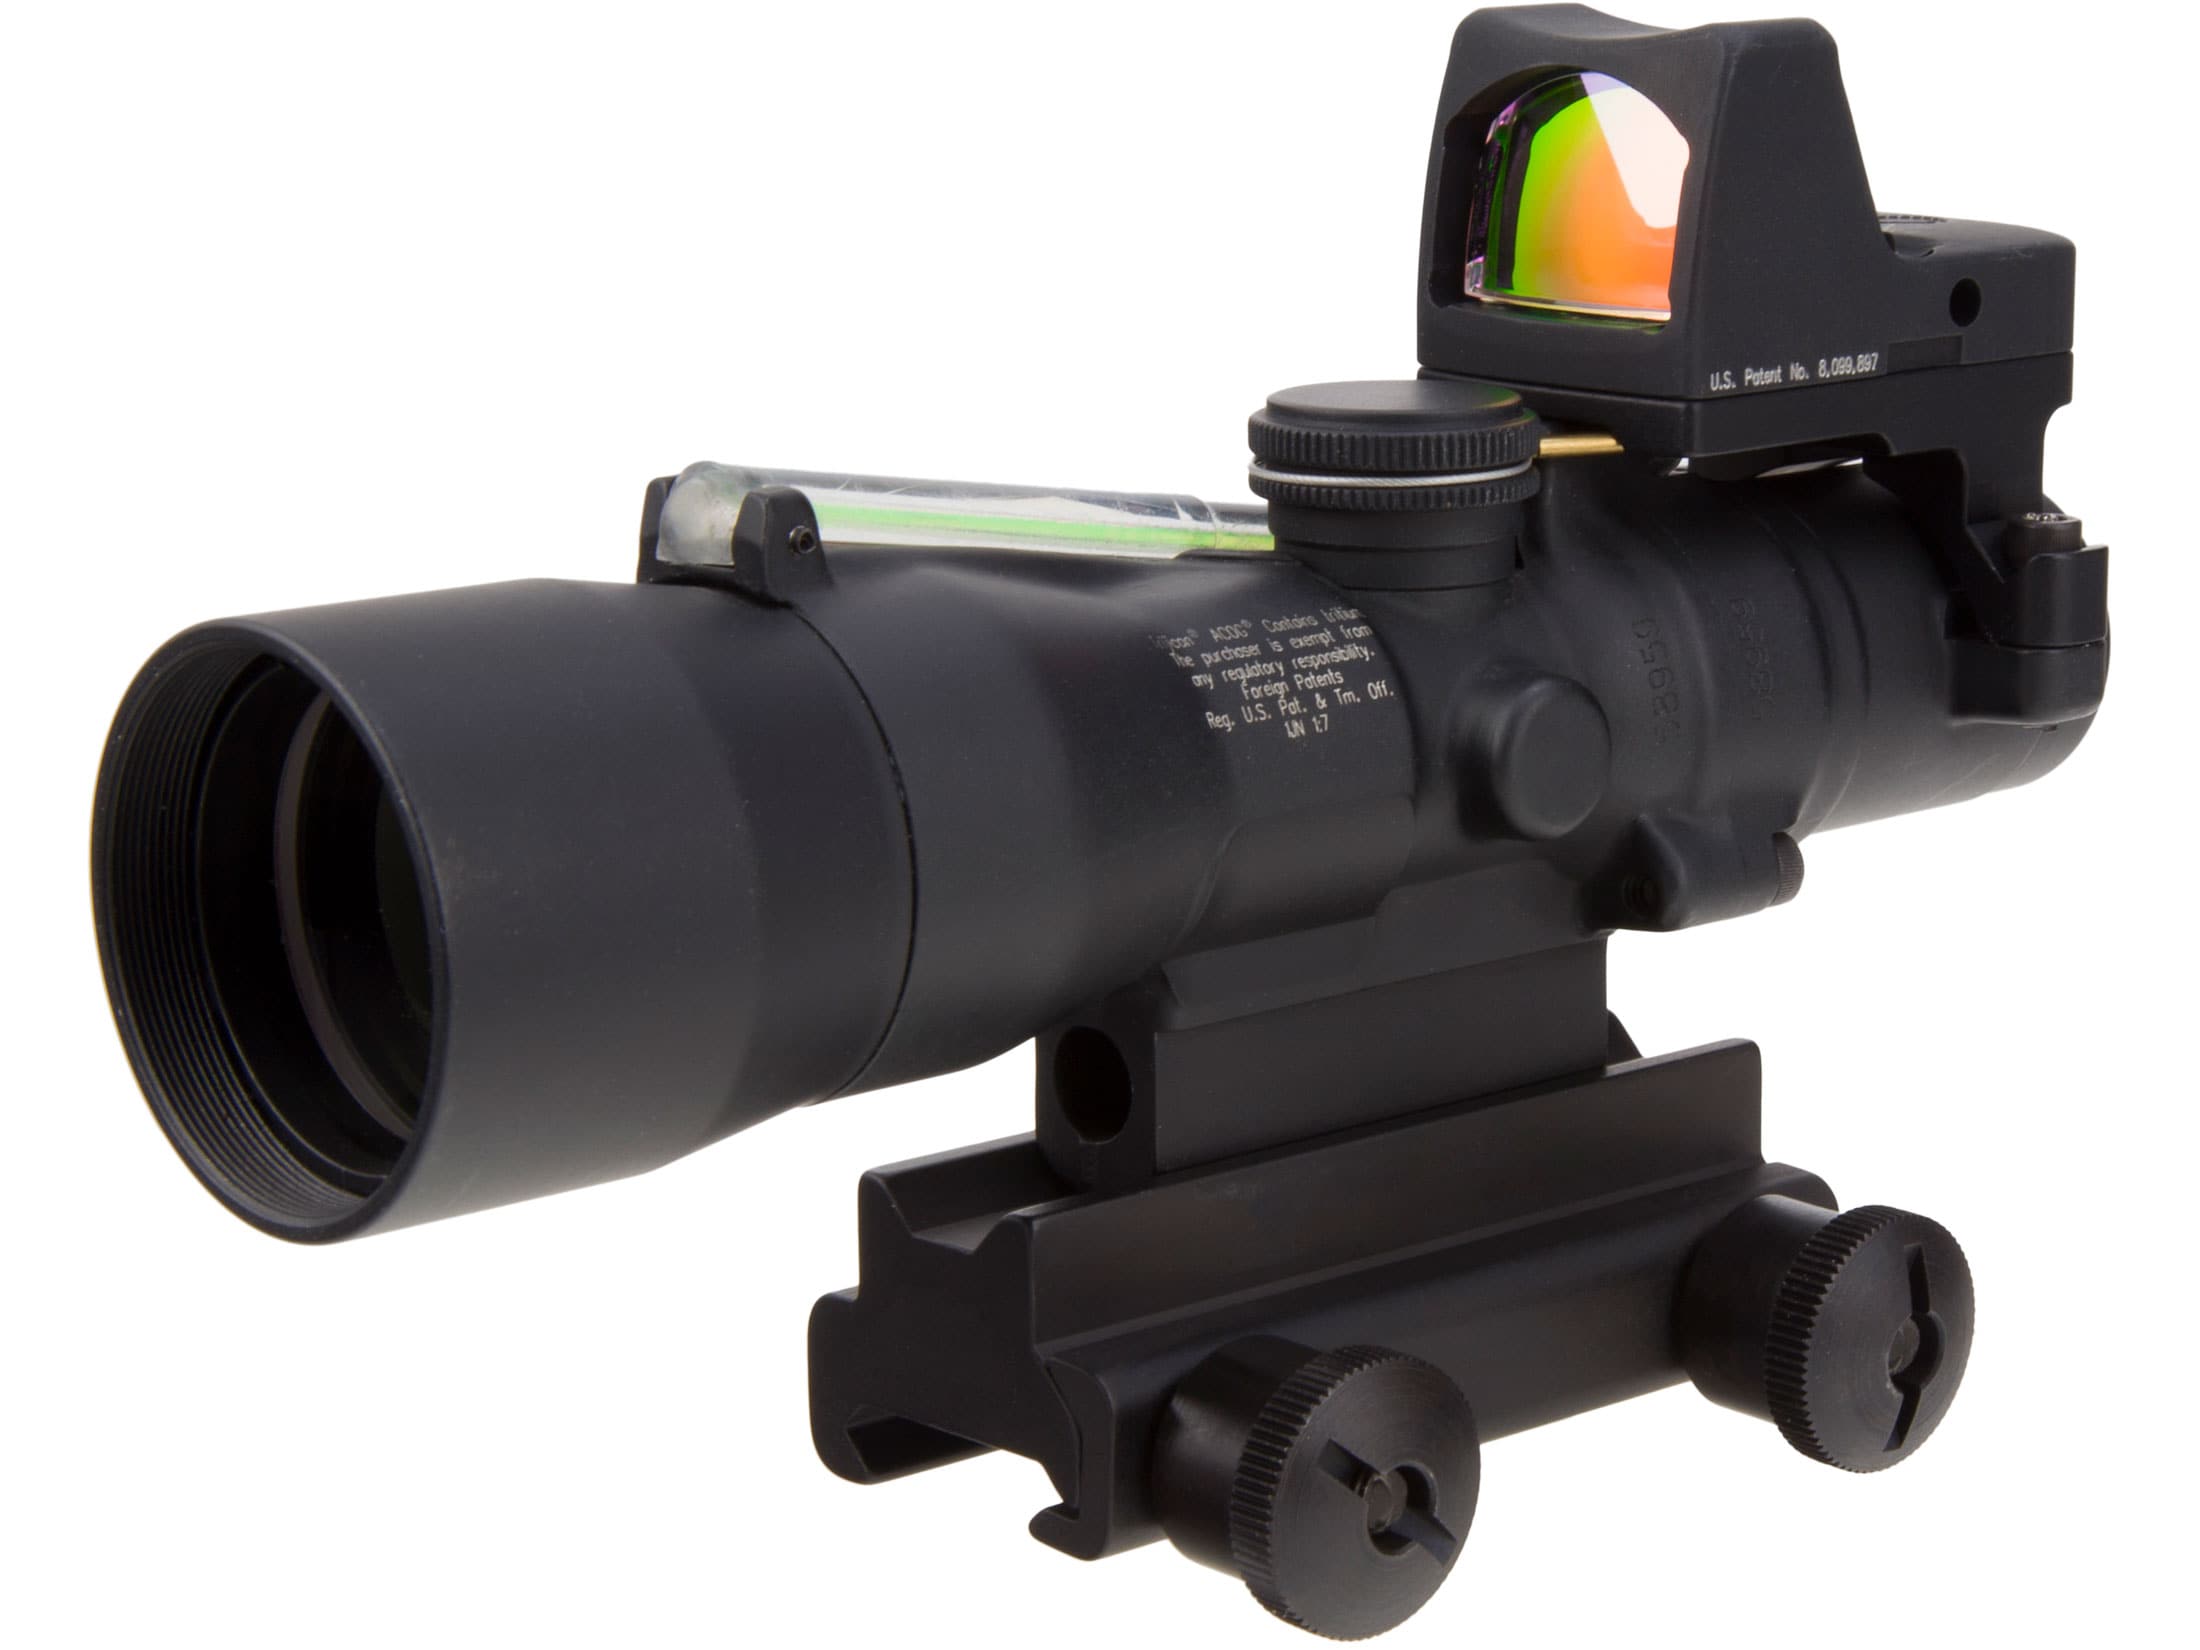 smart shooter scope